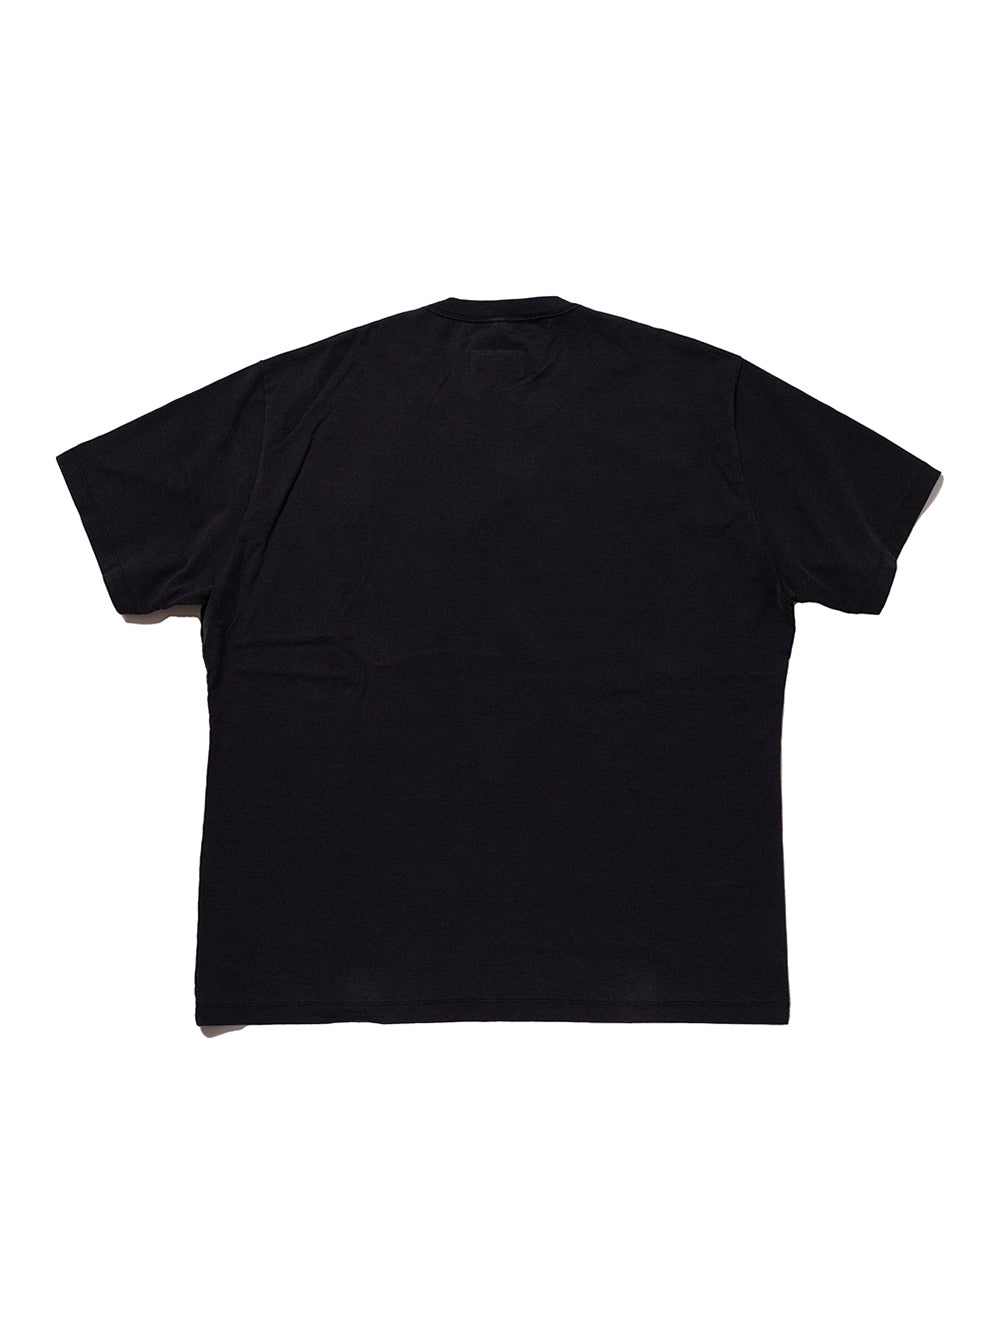 Android Print T-Shirt (Black)